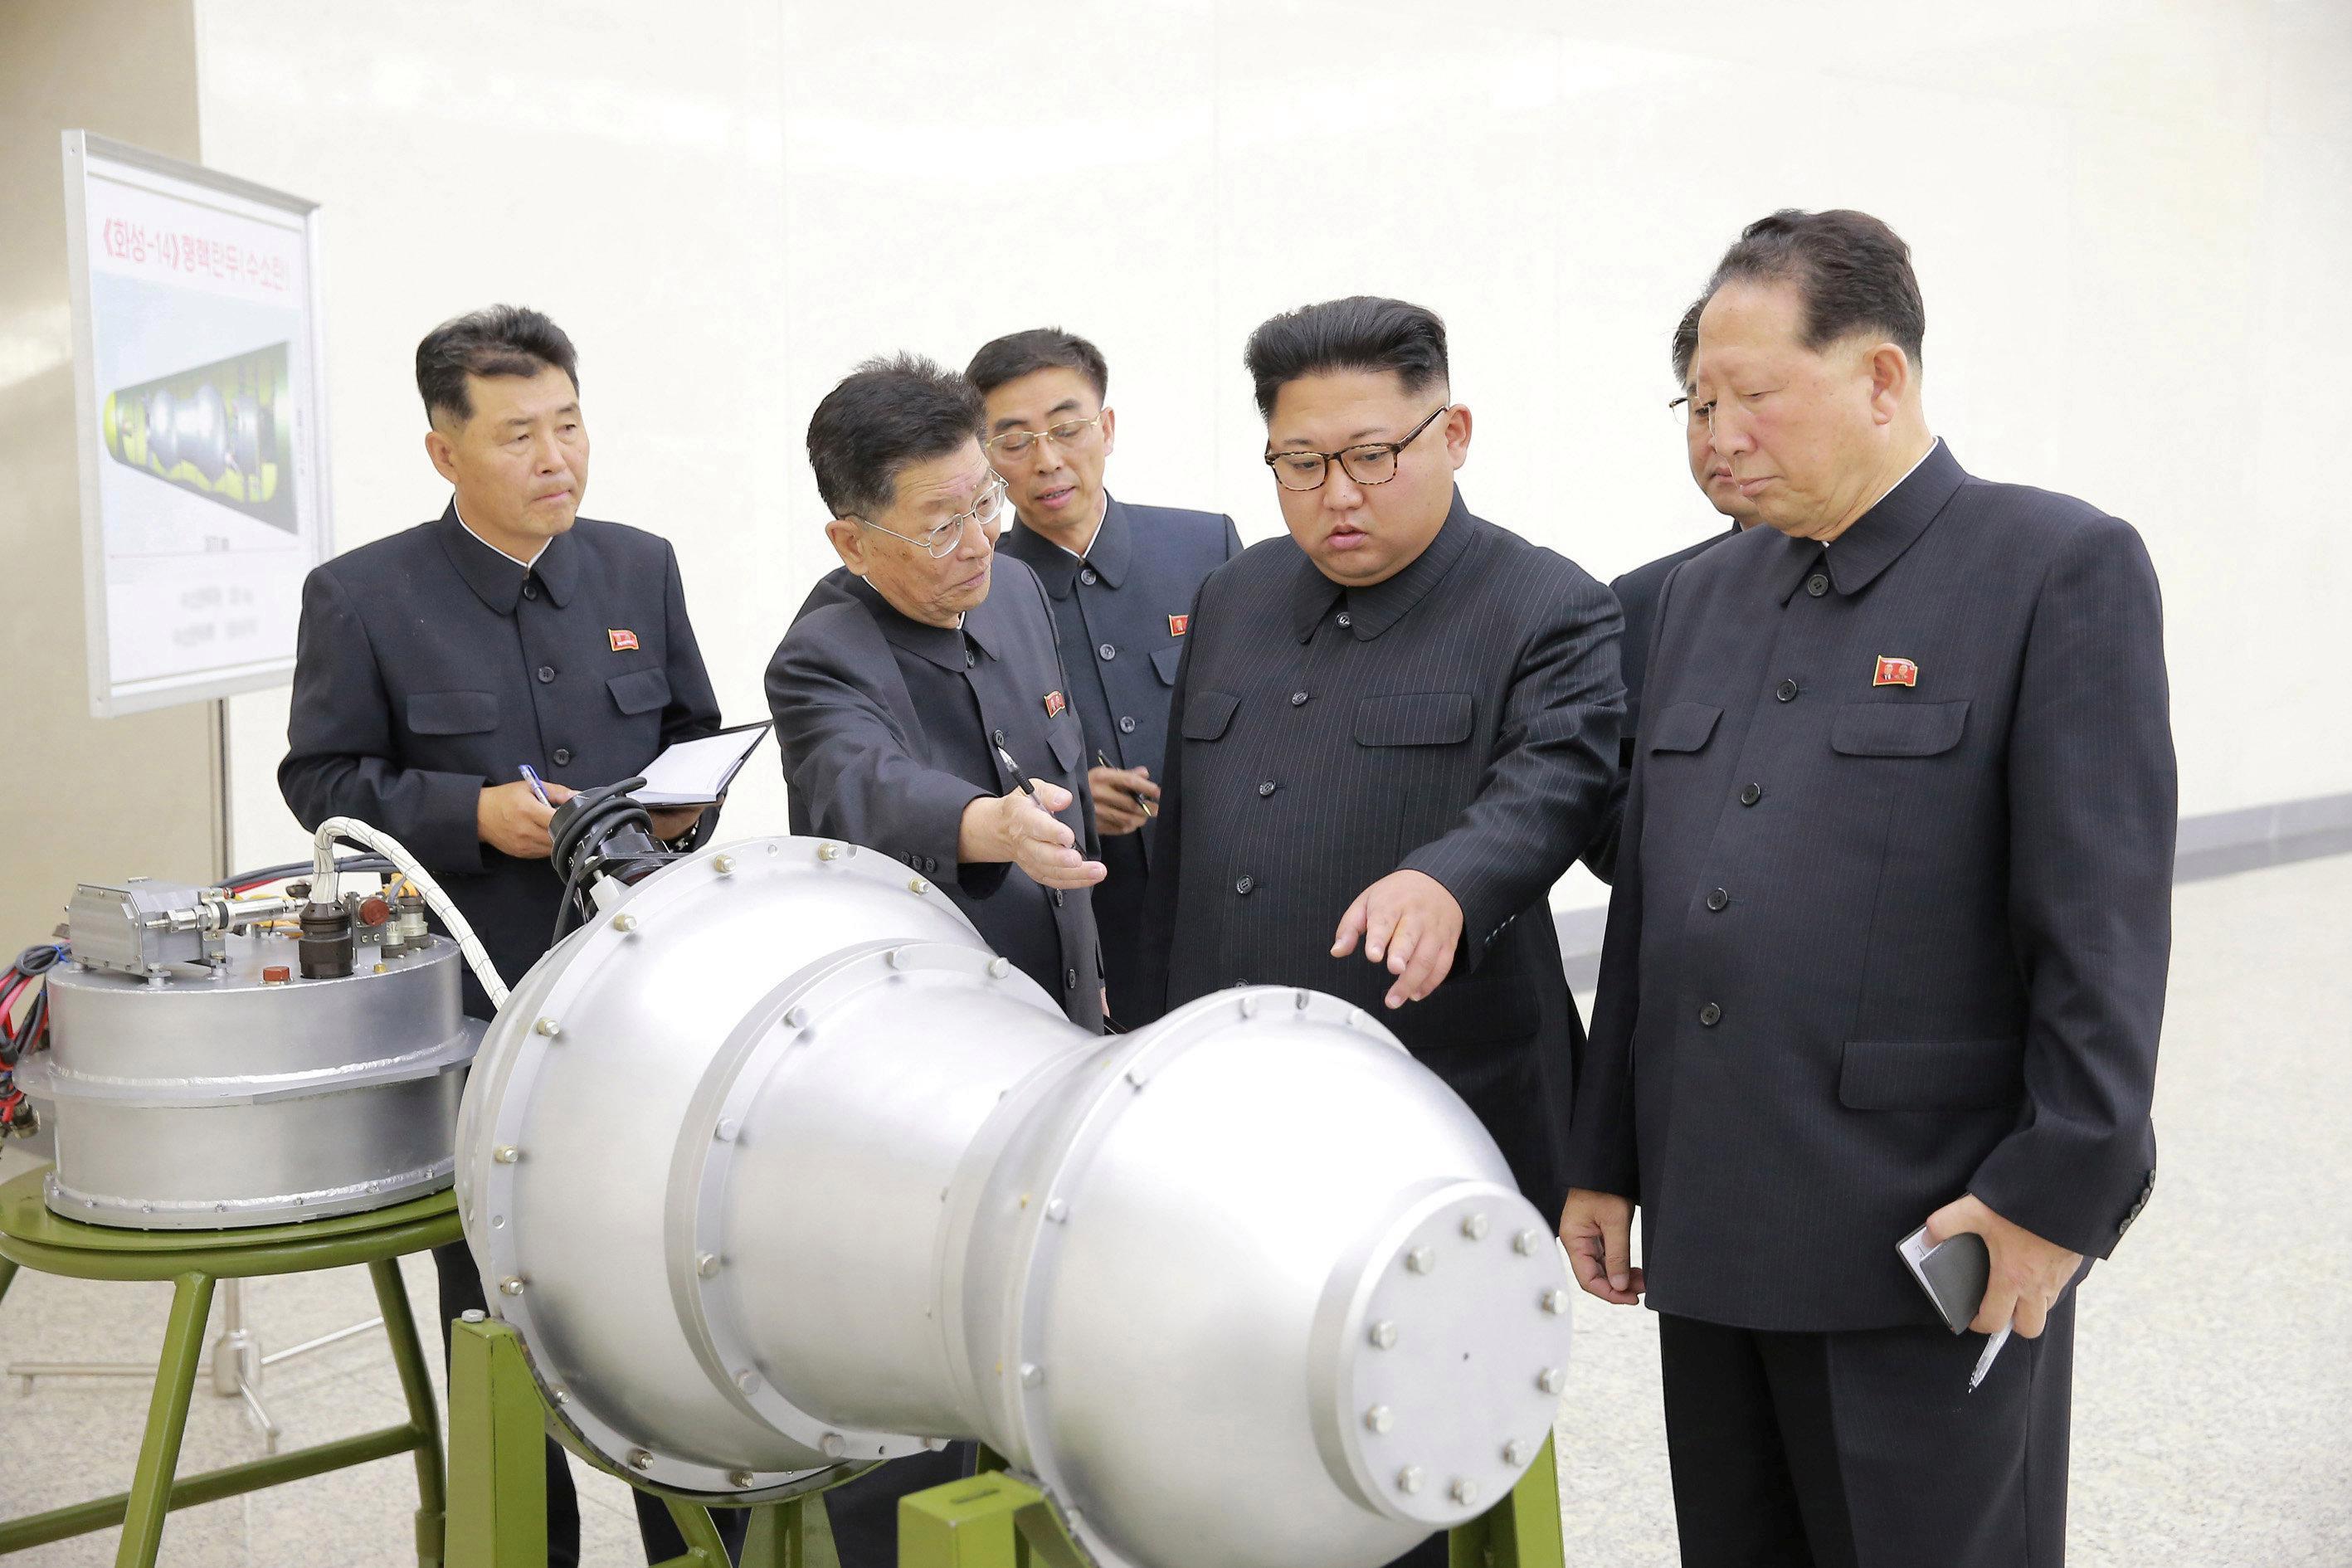  Pemimpin Korea Utara Kim Jong-un memeriksa apa yang diklaim sebagai bom hidrogen yang pas di kerucut hidung misil minggu lalu